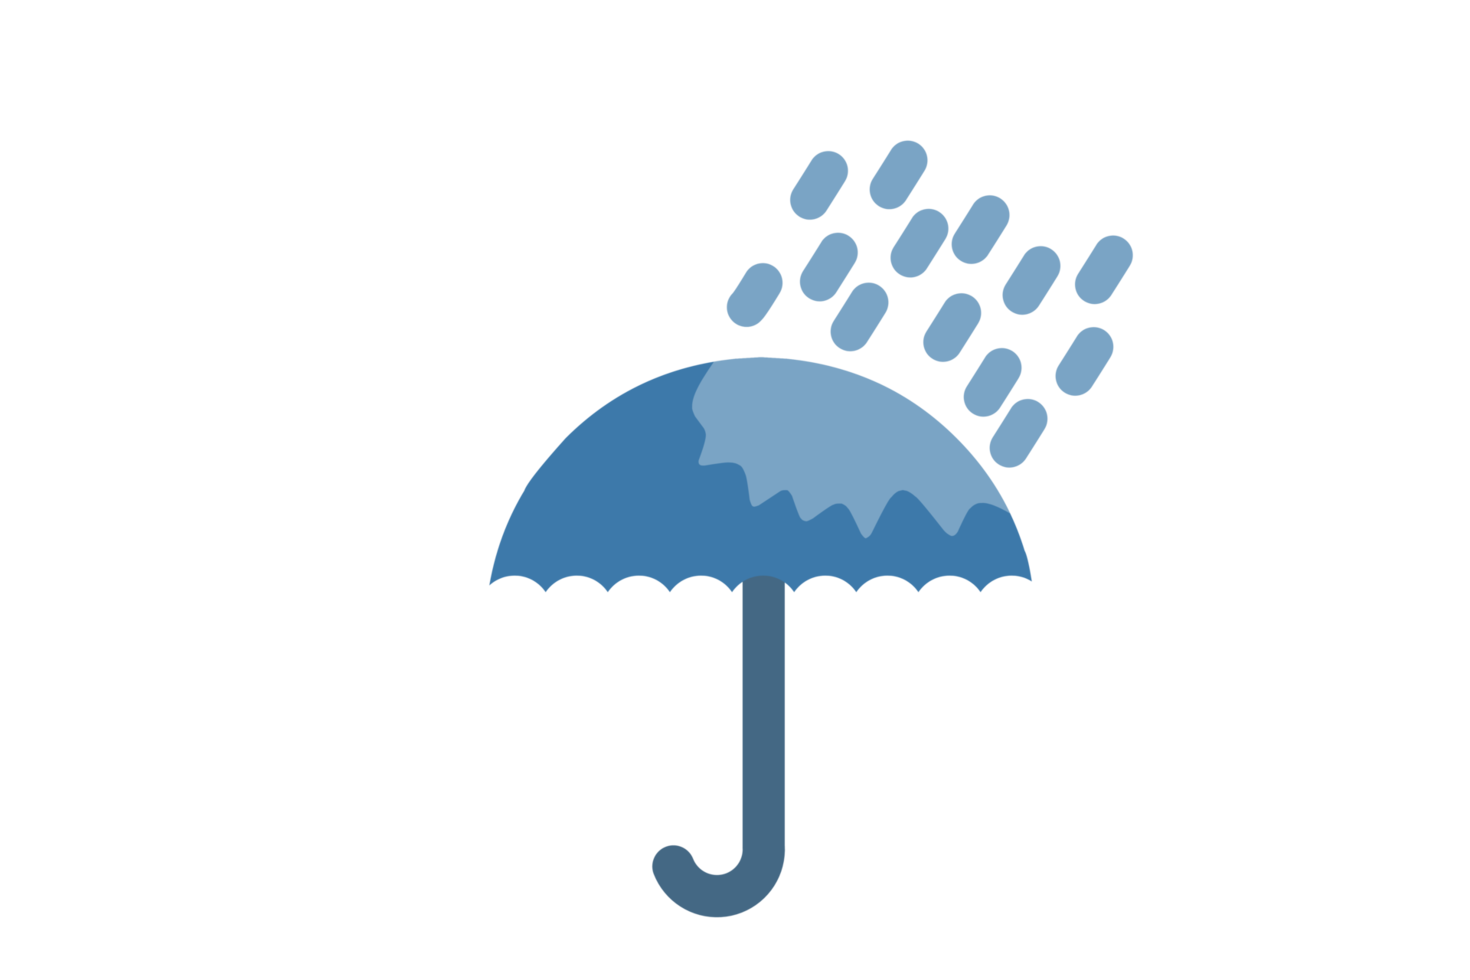 umbrella flat illustration icon with rain png